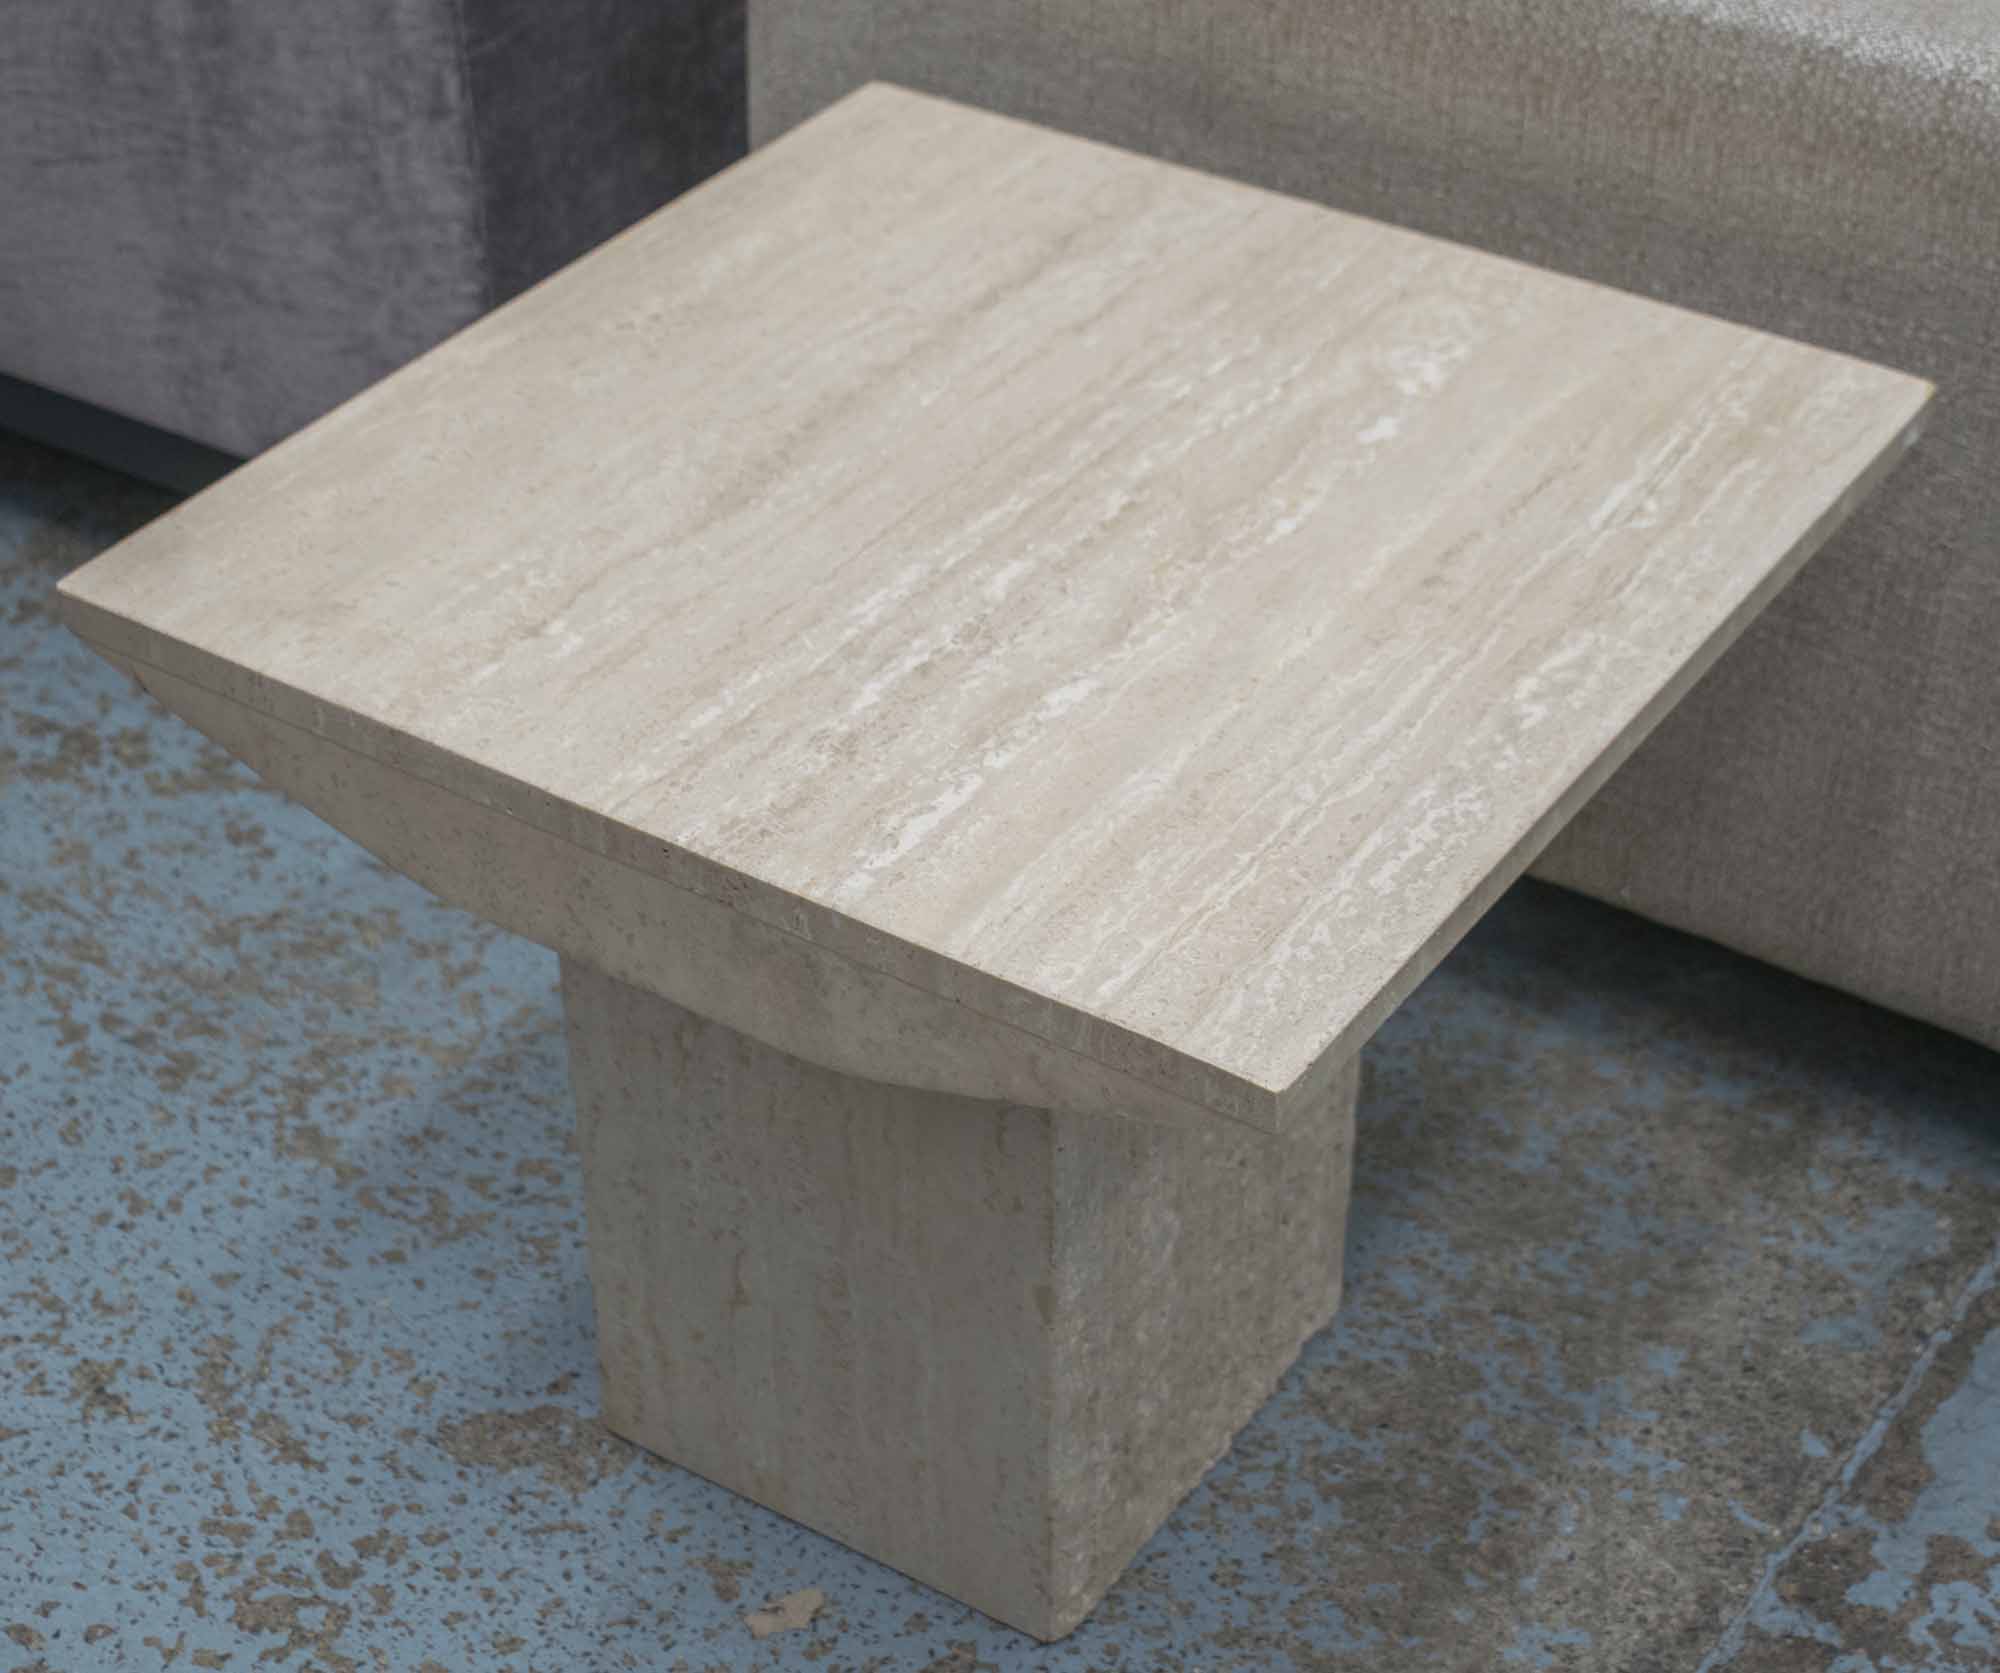 LOW TABLE, square travertine marble on plinth base, 60cm x 60cm x 52cm H.